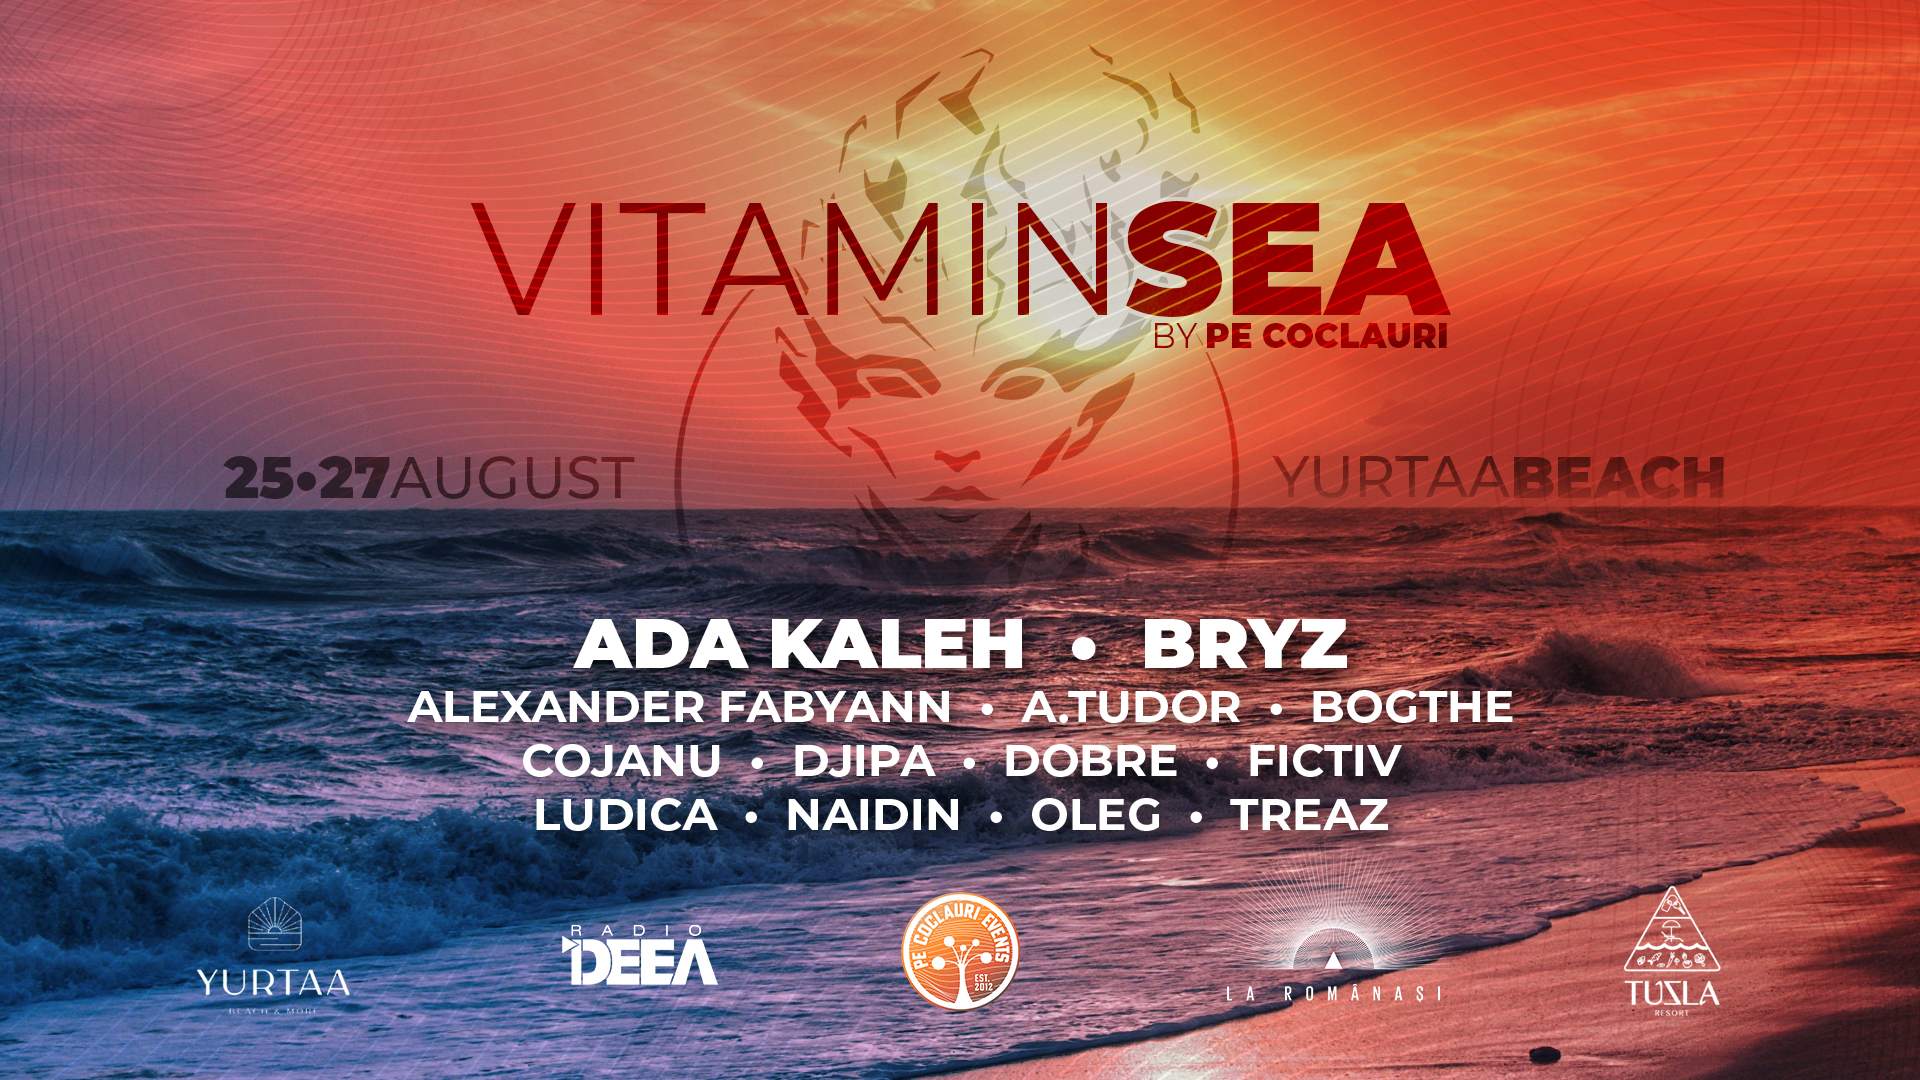 VitaminSea at Yurtaa Beach by Pe Coclauri - フライヤー表